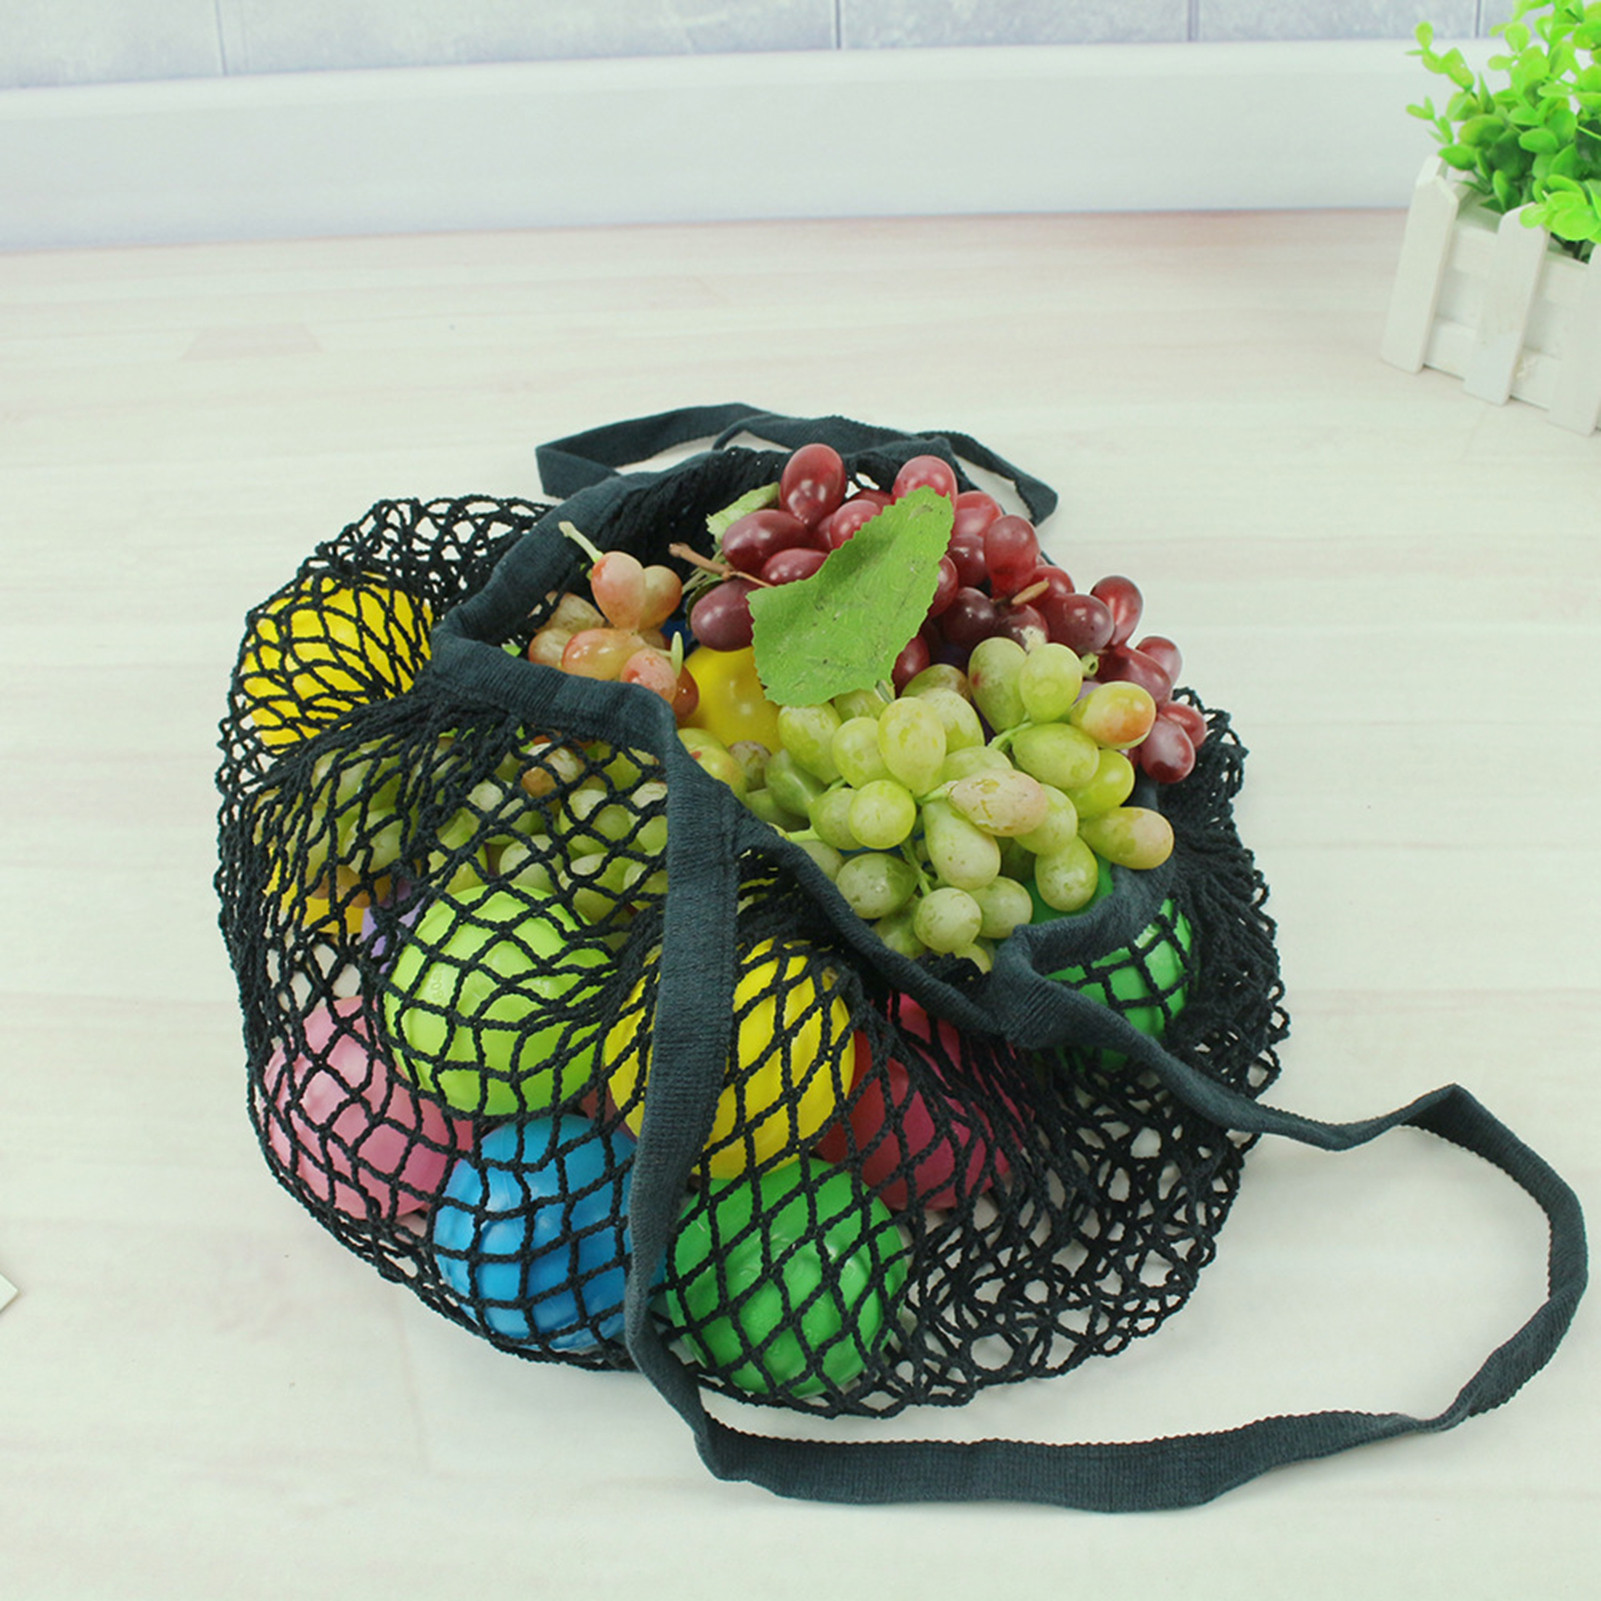 Outdoor Portable Reusable Cotton Mesh Net Shopping Bag Fruit Vegetable Foods Grocery Breathable Handbag